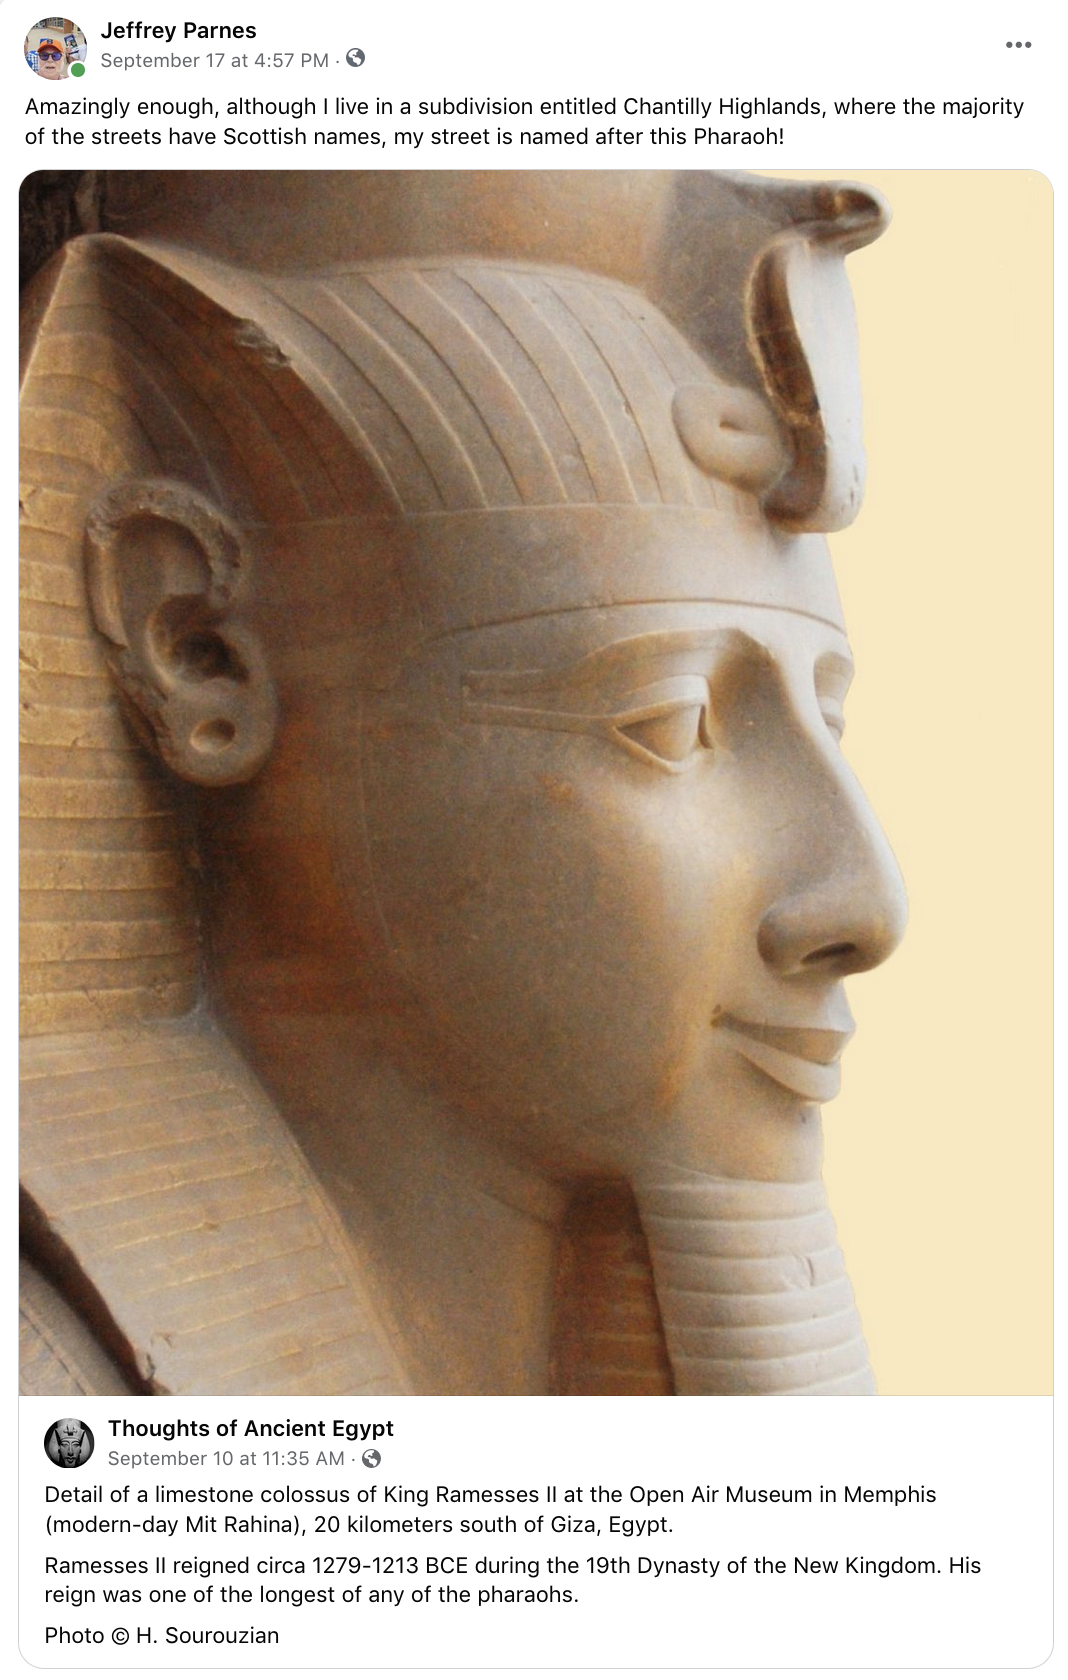 Ramesses